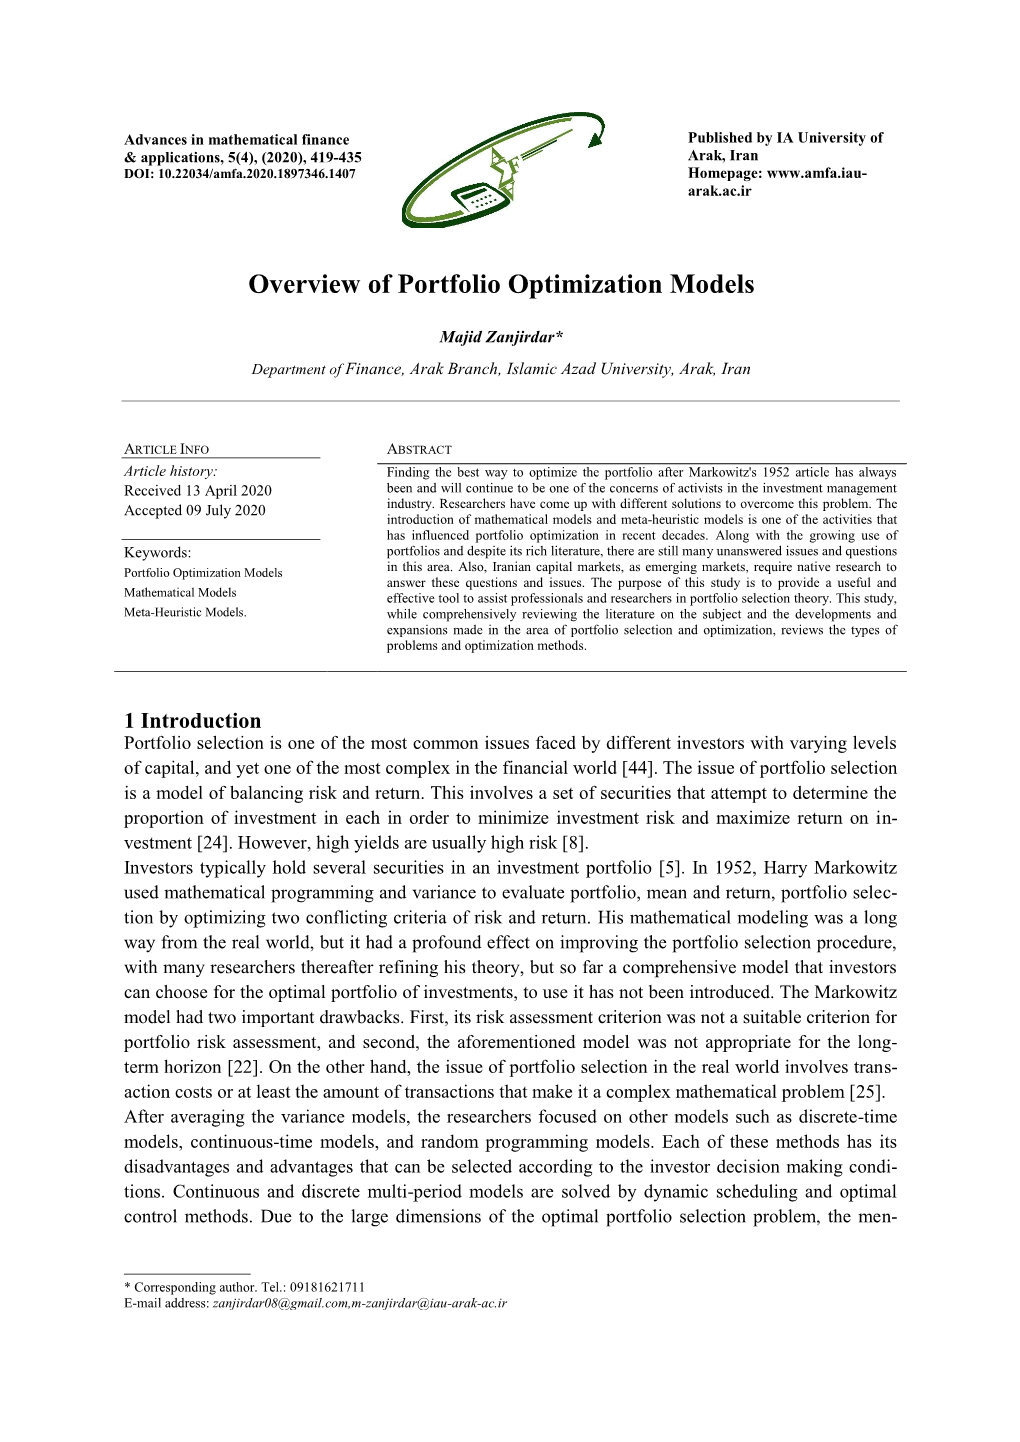 Overview of Portfolio Optimization Models